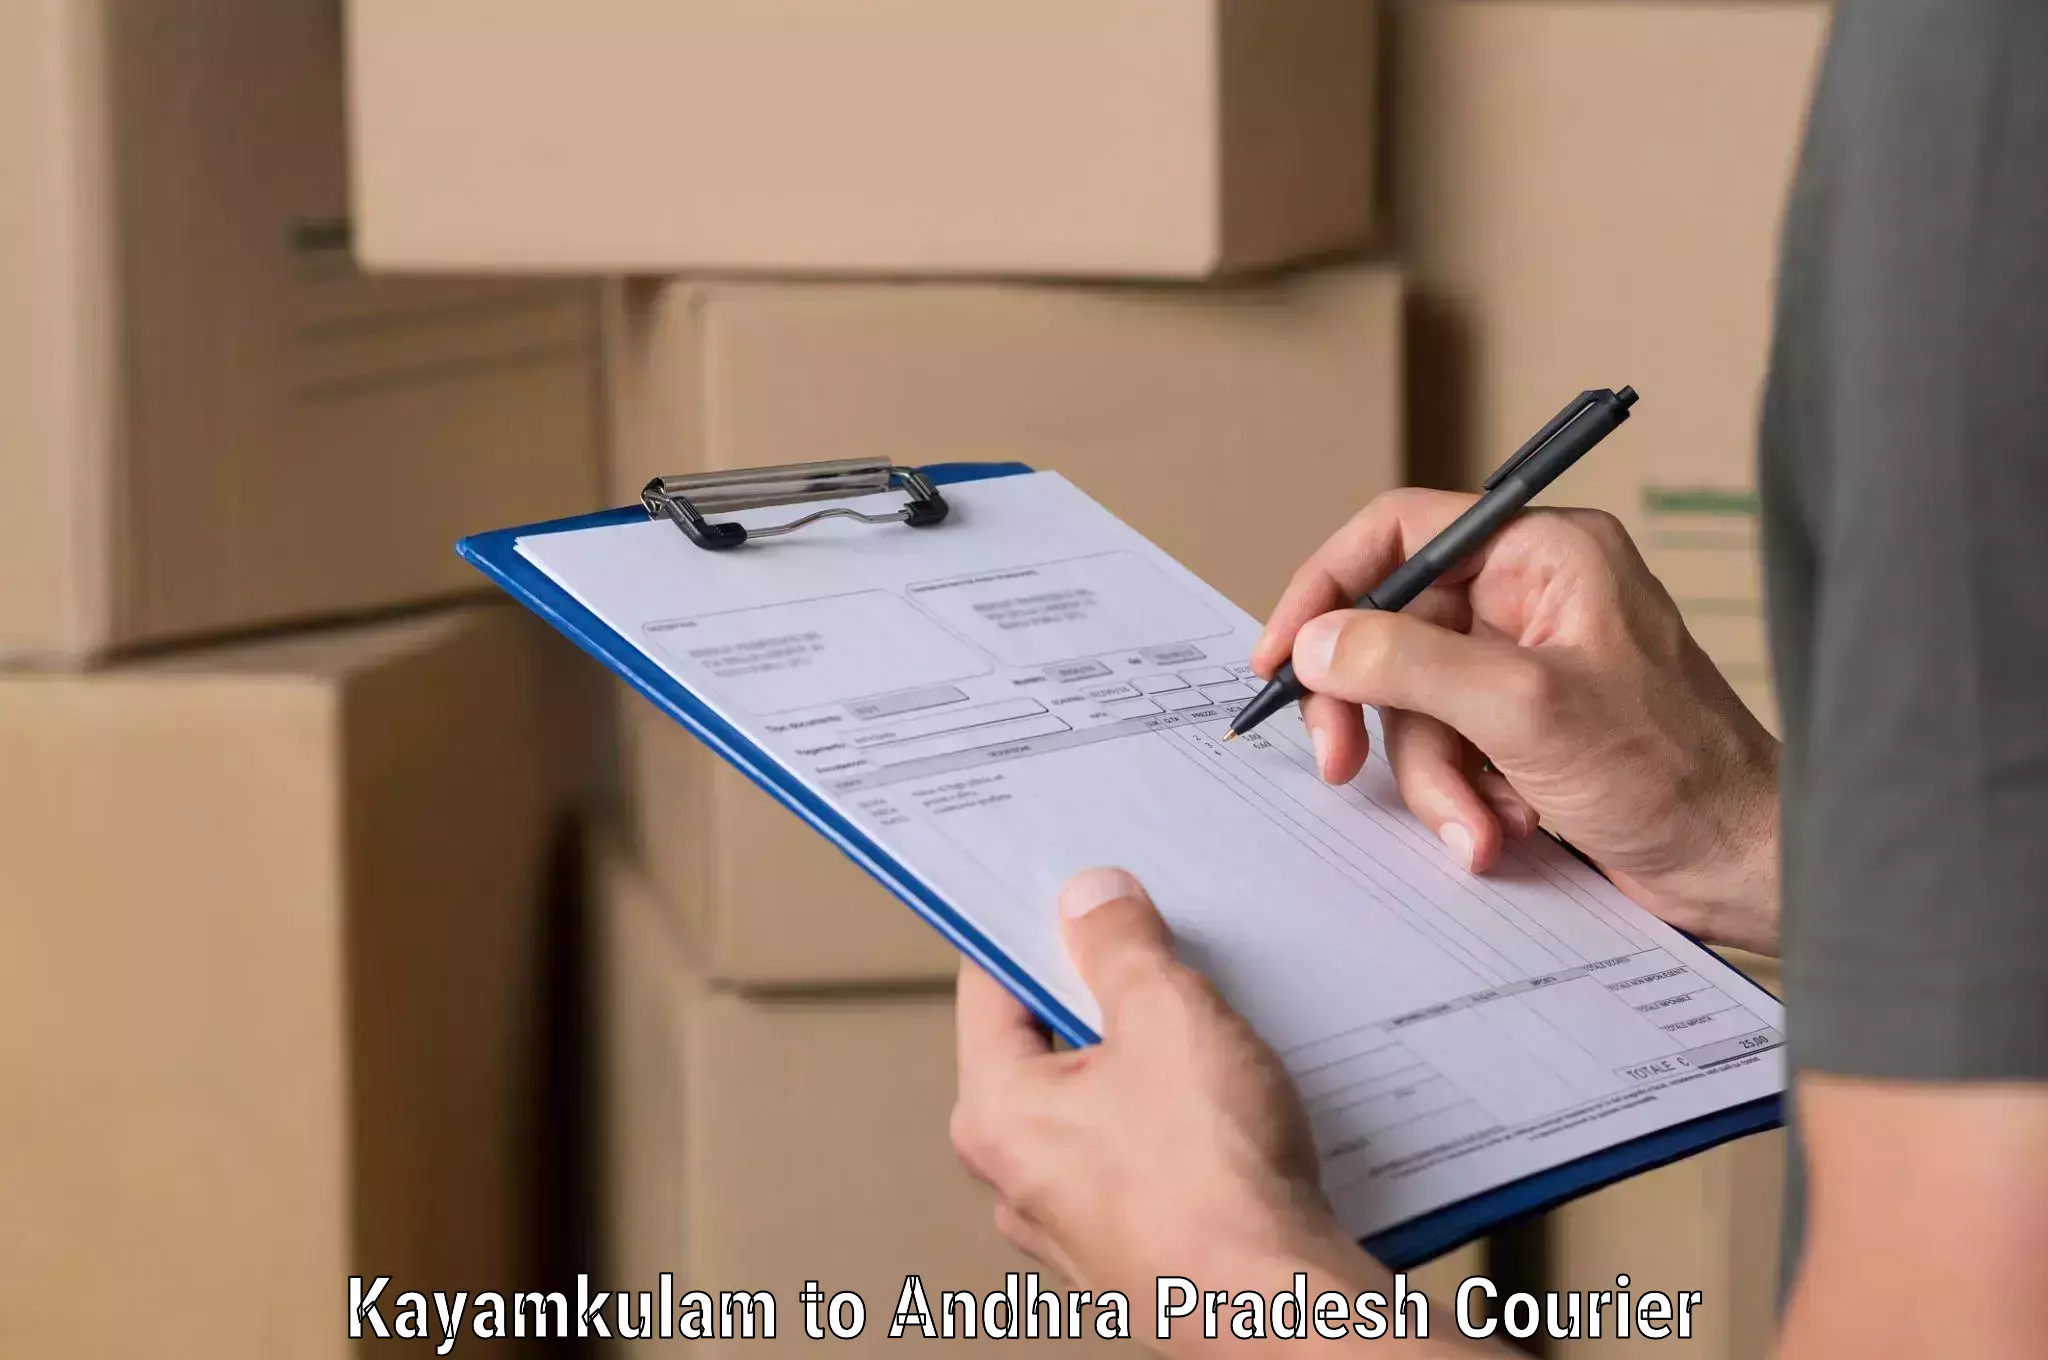 Package delivery network Kayamkulam to Pedapadu